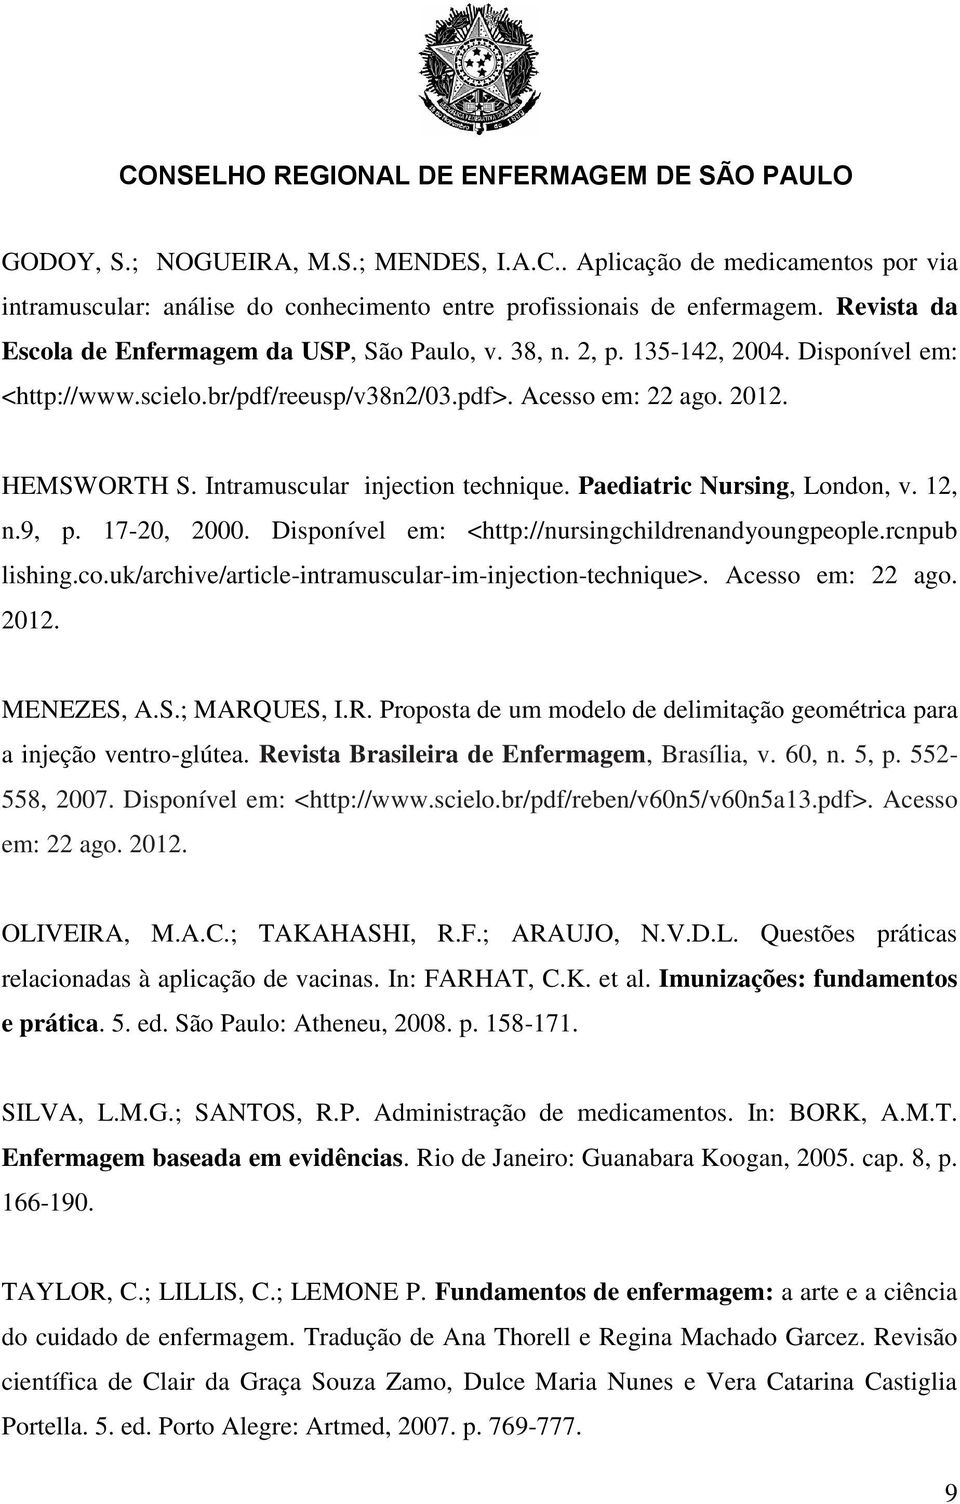 Intramuscular injection technique. Paediatric Nursing, London, v. 12, n.9, p. 17-20, 2000. Disponível em: <http://nursingchildrenandyoungpeople.rcnpub lishing.co.